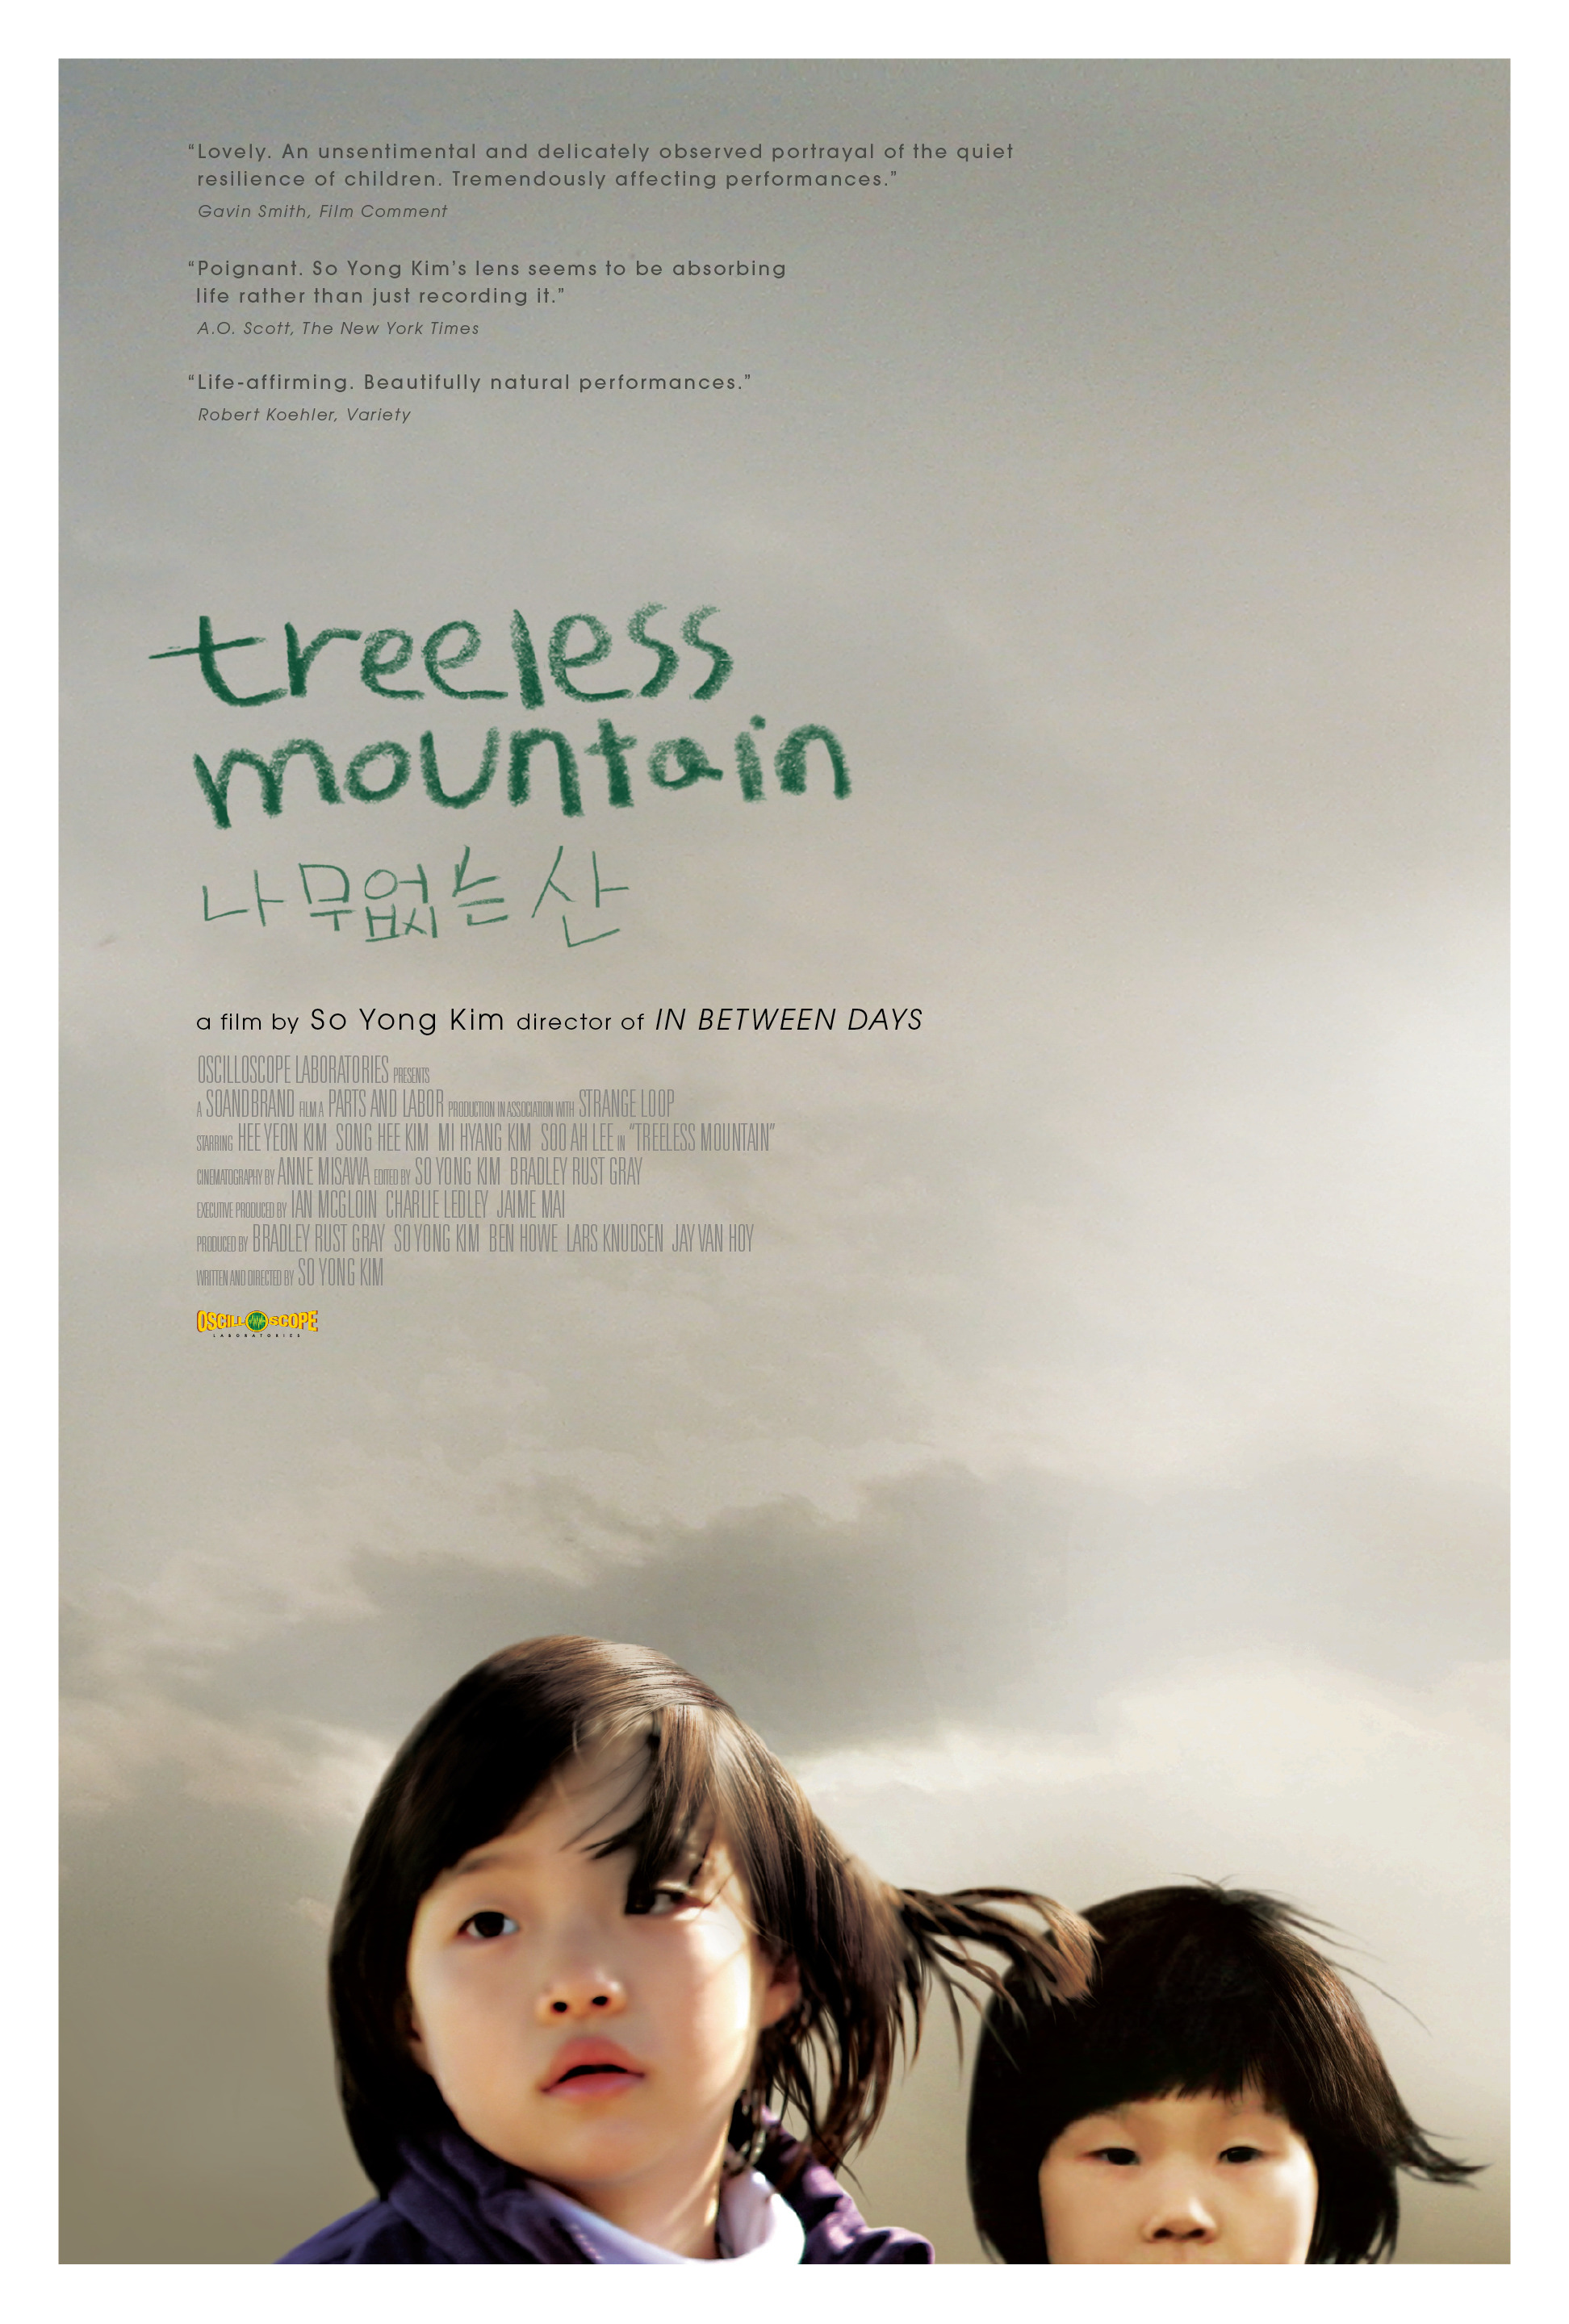 Mega Sized Movie Poster Image for Treeless Mountain (#1 of 2)